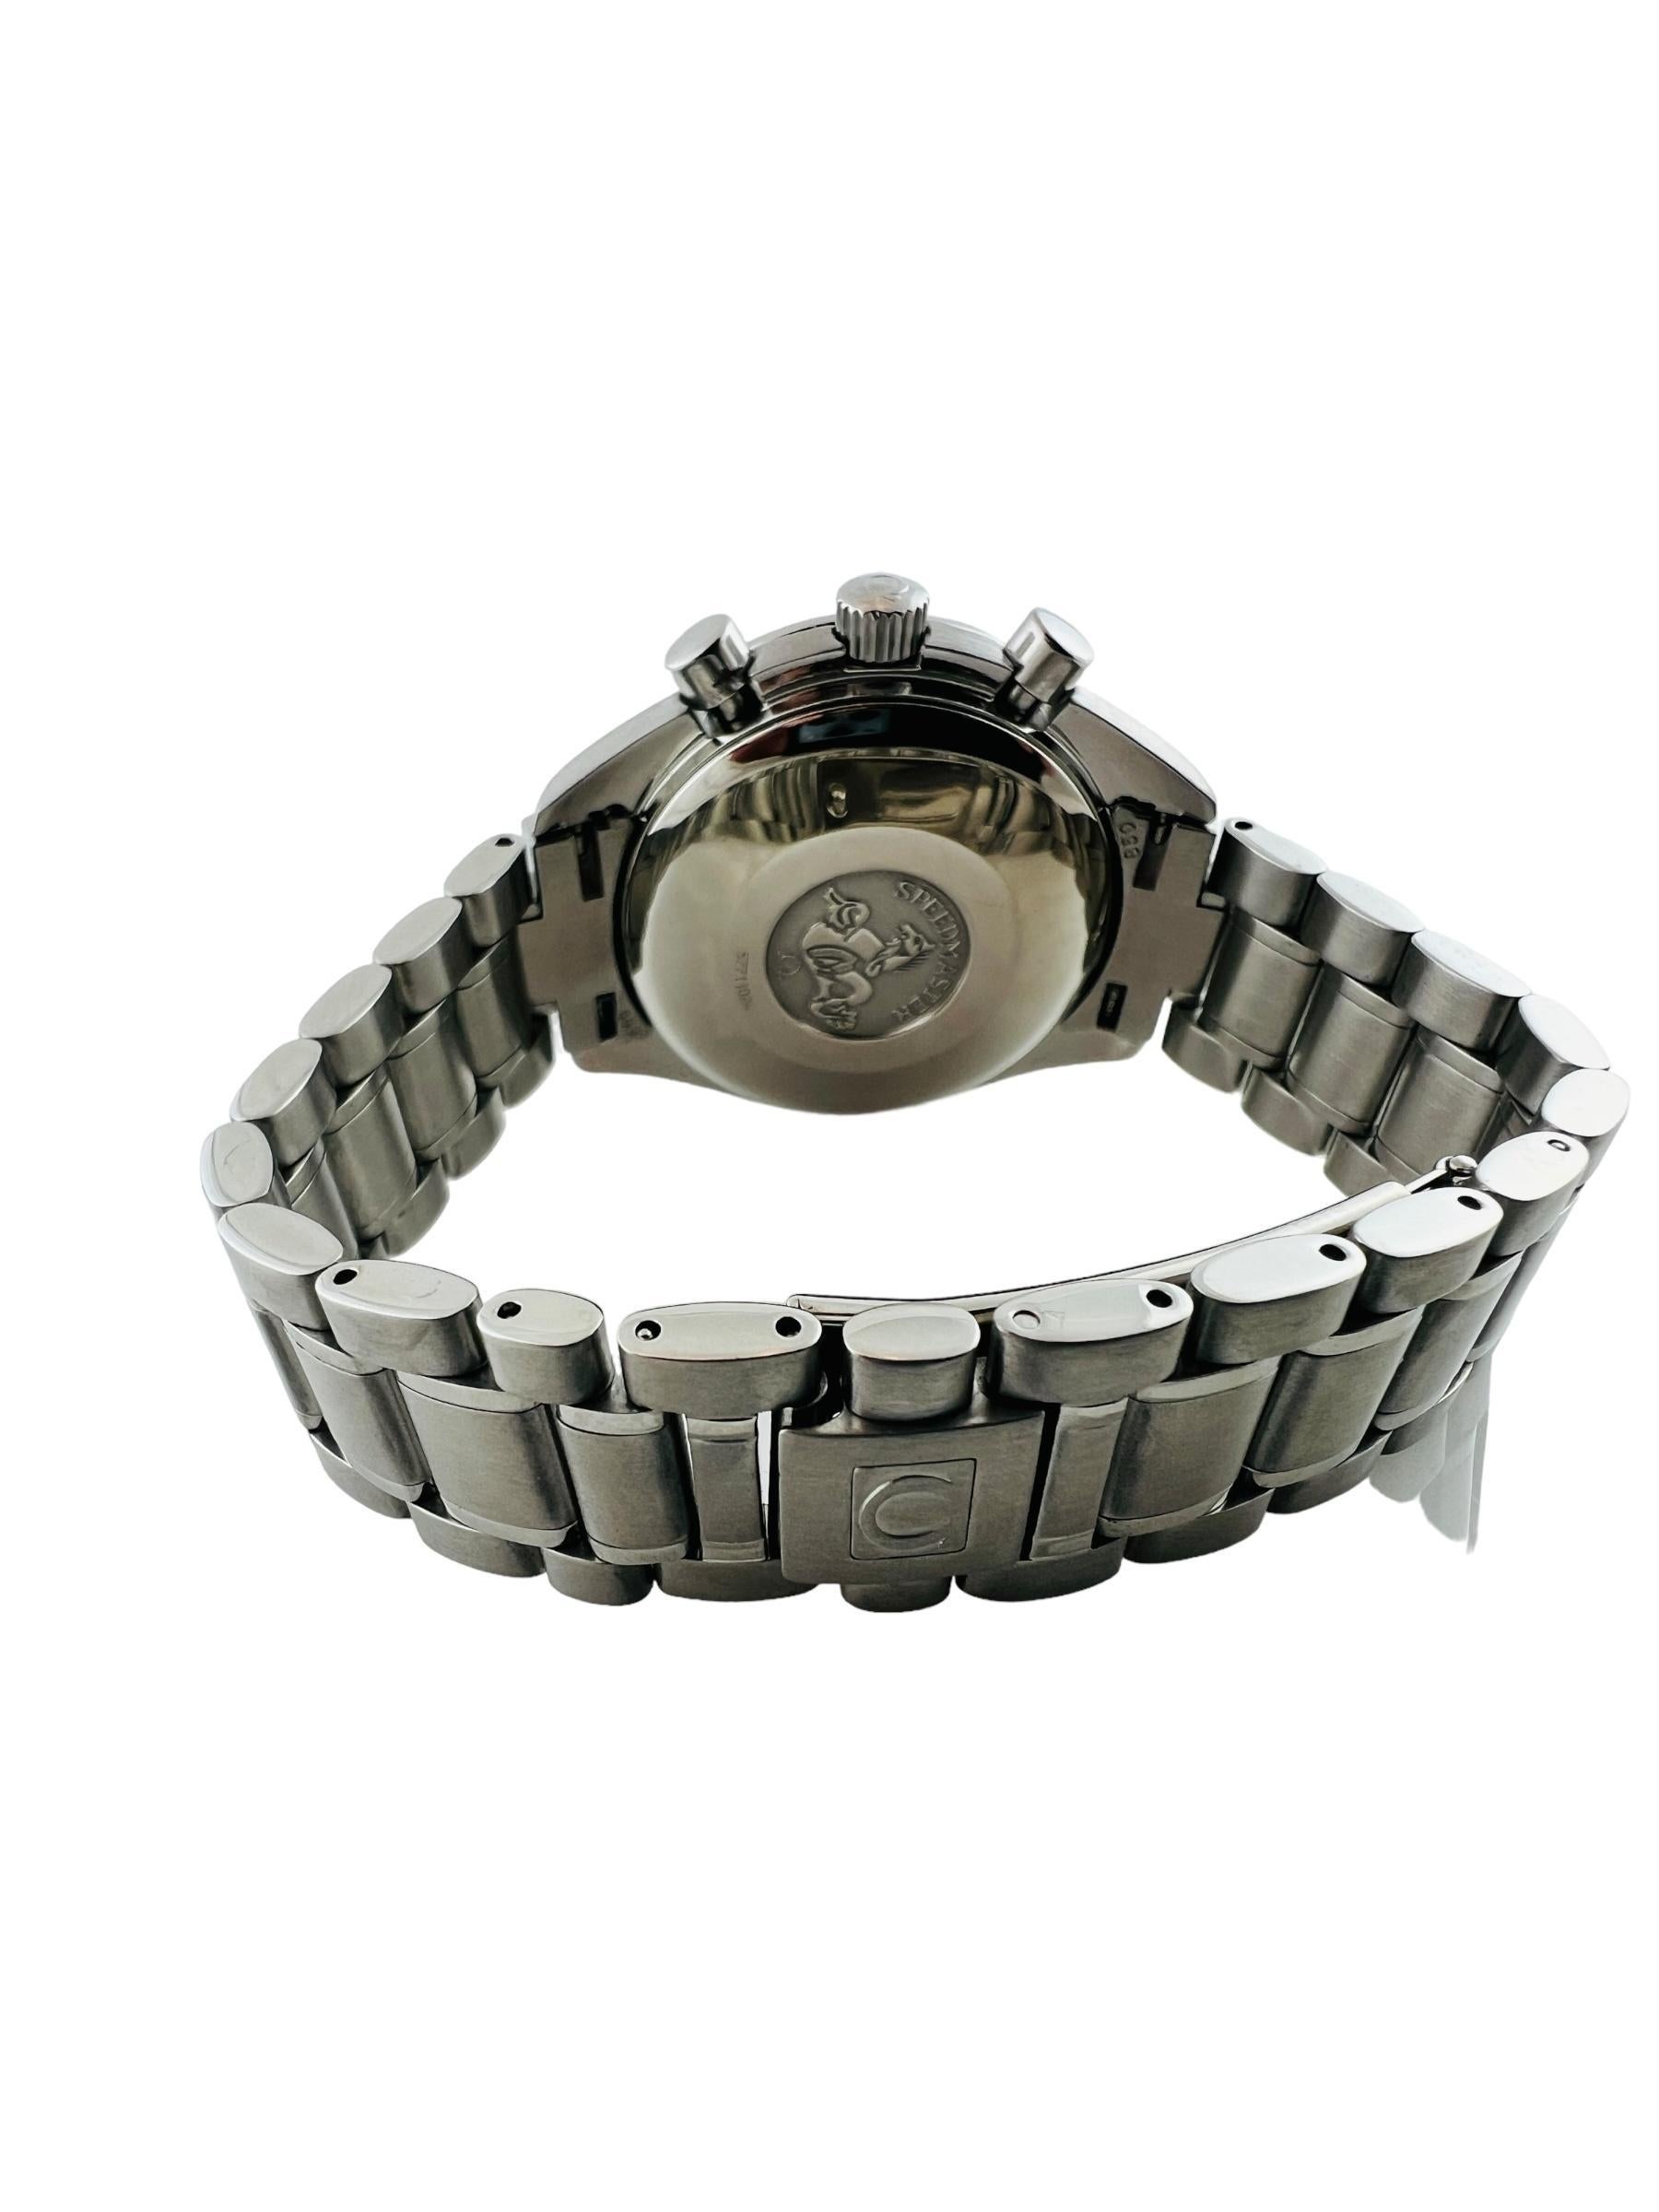 Omega Speedmaster Date Men's Watch 3513.50 Chronograph #16654 4